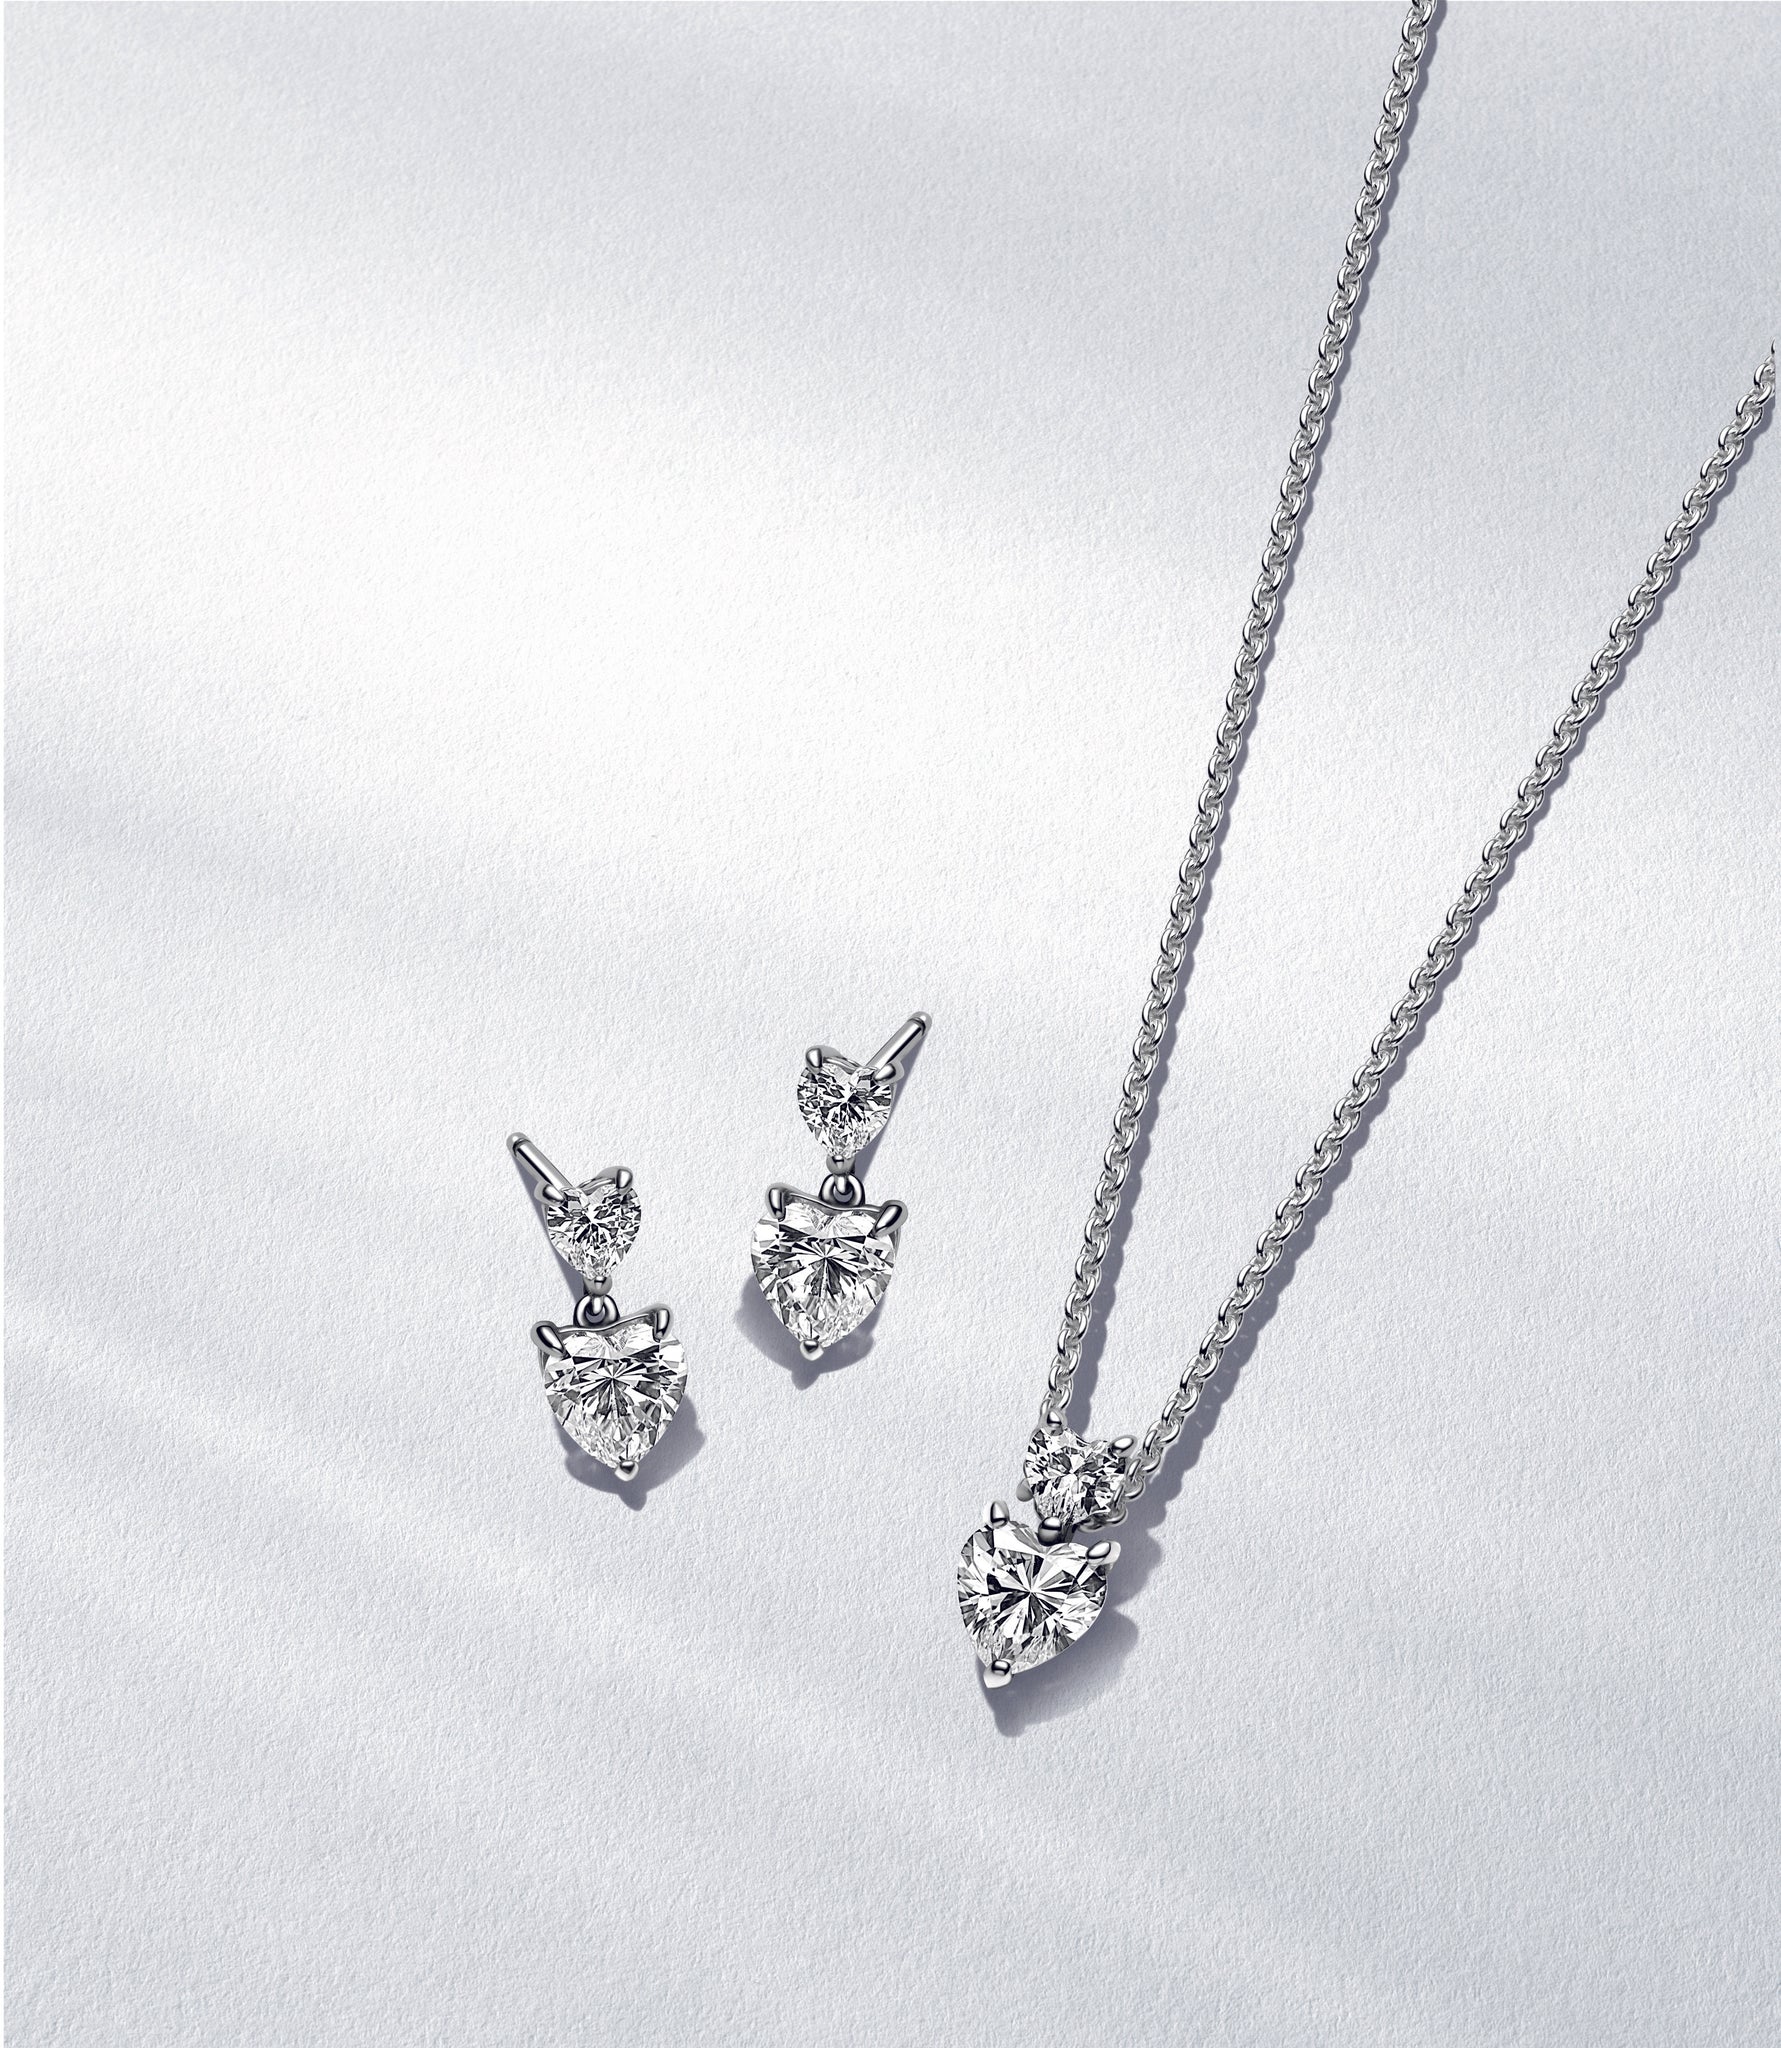 Pandora Signature Bracelet and Necklace Set | Sterling silver | Pandora NZ